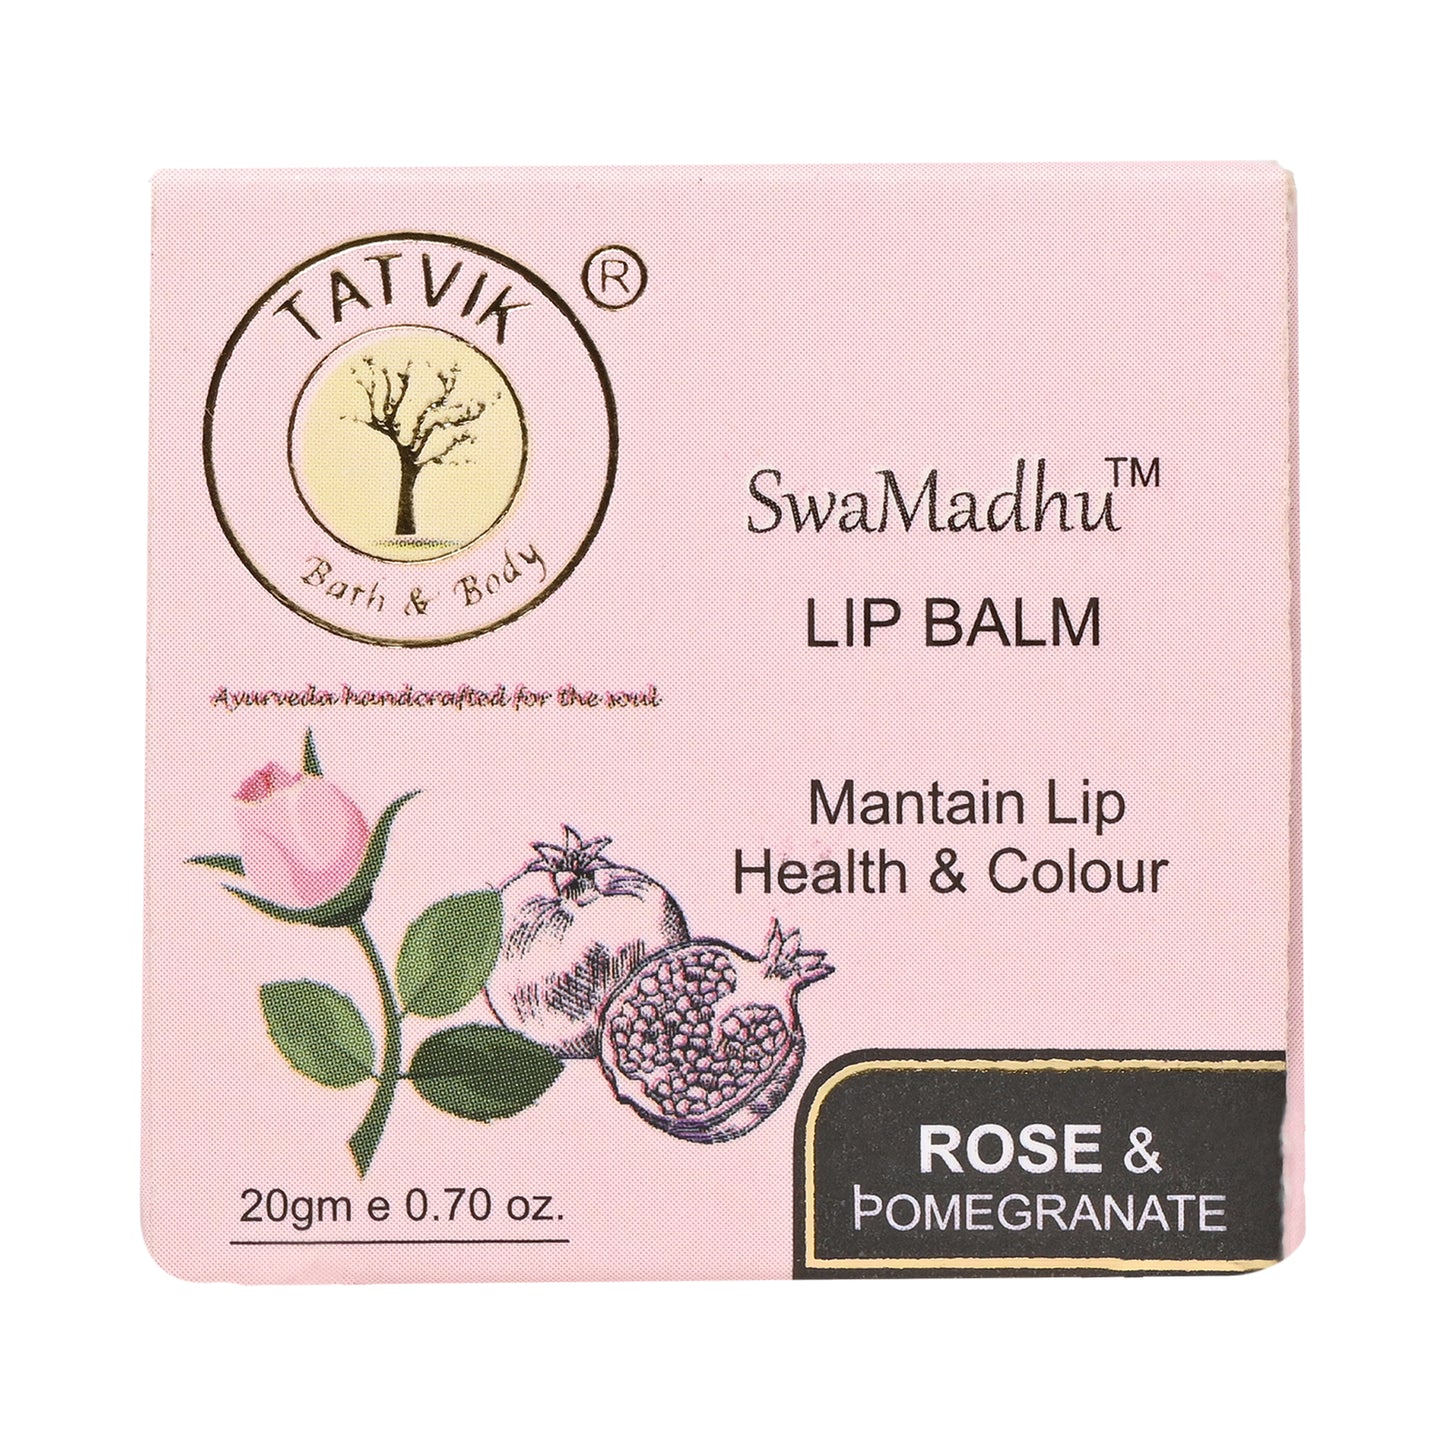 SwaMadhu Rose & Pomegranate - Lip Balm and Tint